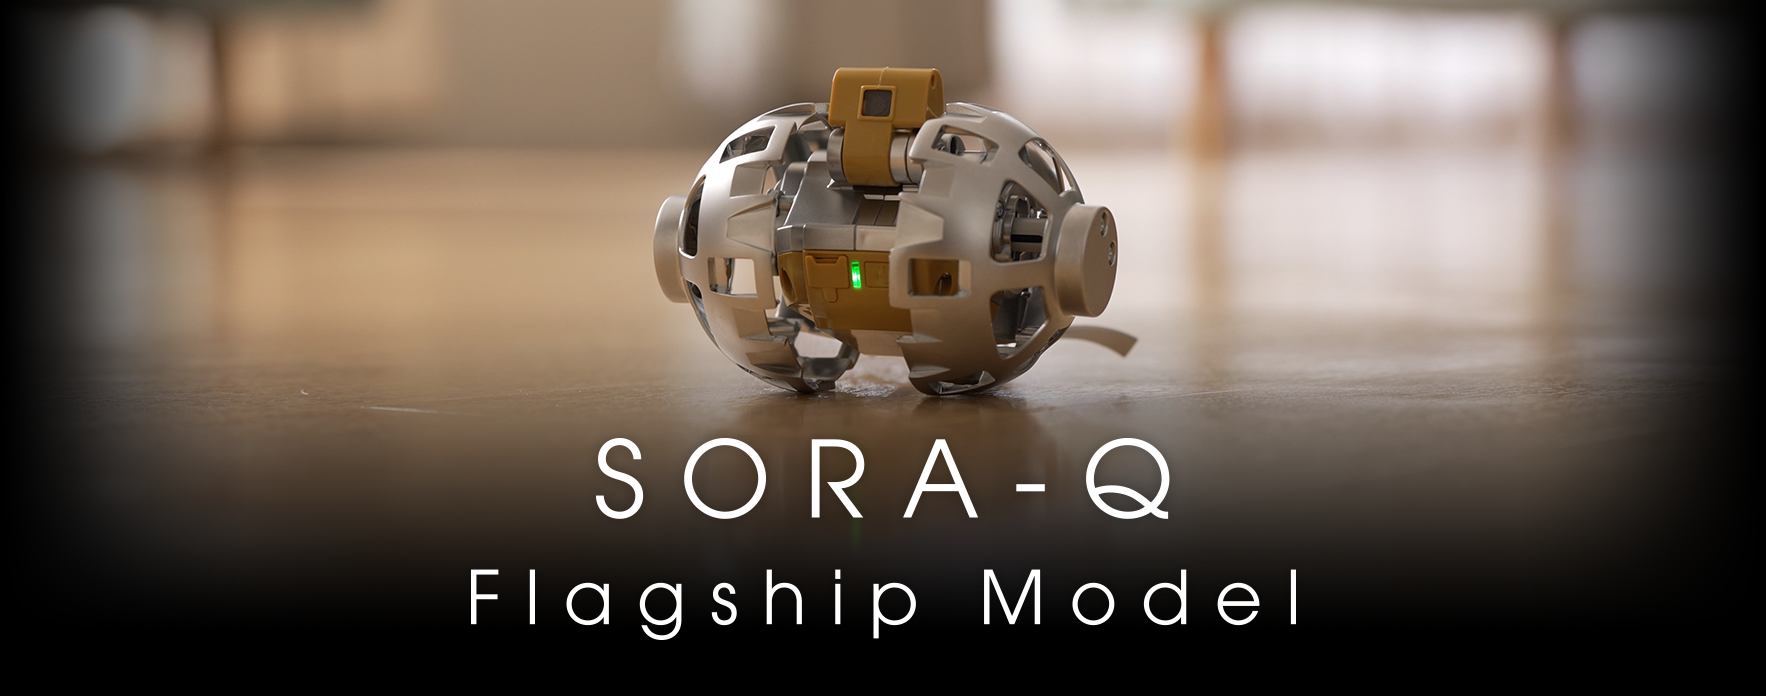 SORA-Q Flagship Model-宇宙兄弟EDITION-